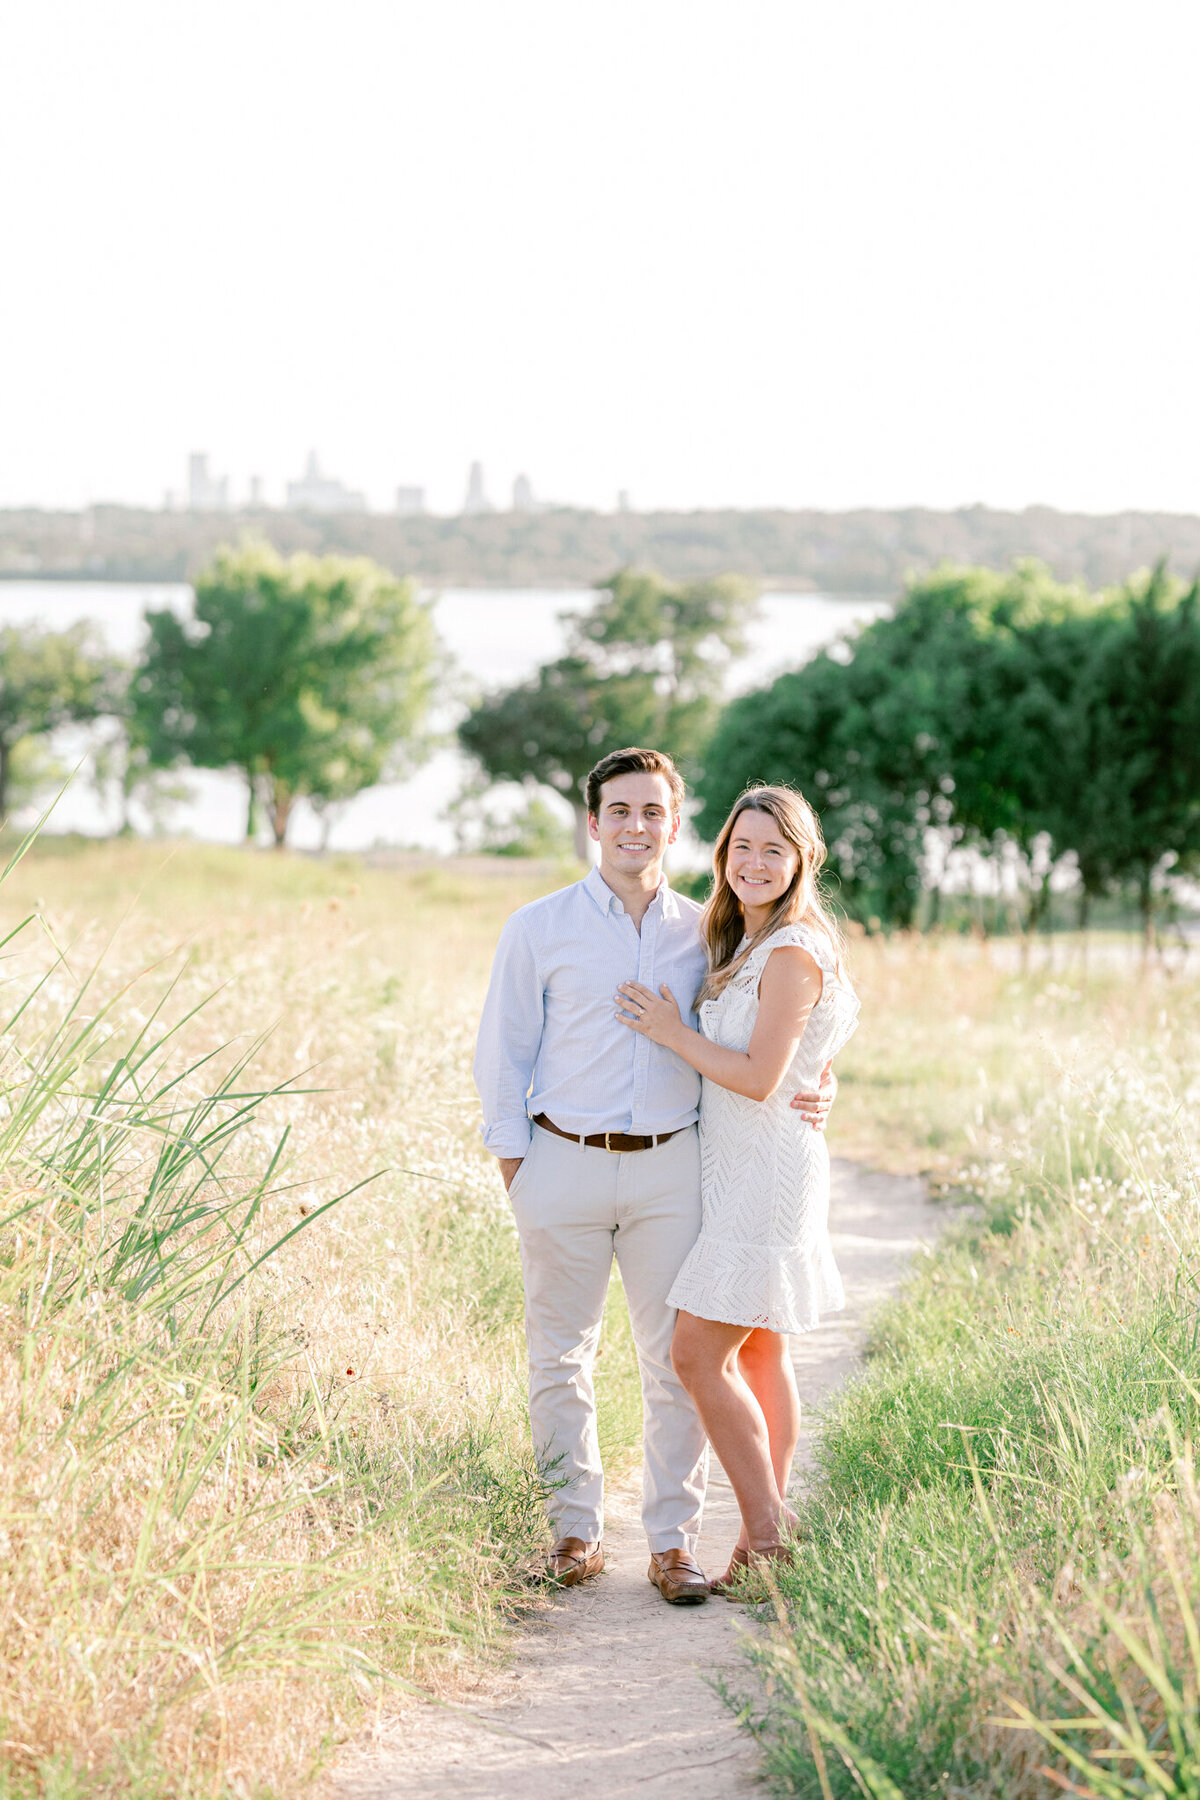 Regan & Owen's White Rock Lake Engagement Session | Dallas Wedding Photographer | Sami Kathryn Photography-16